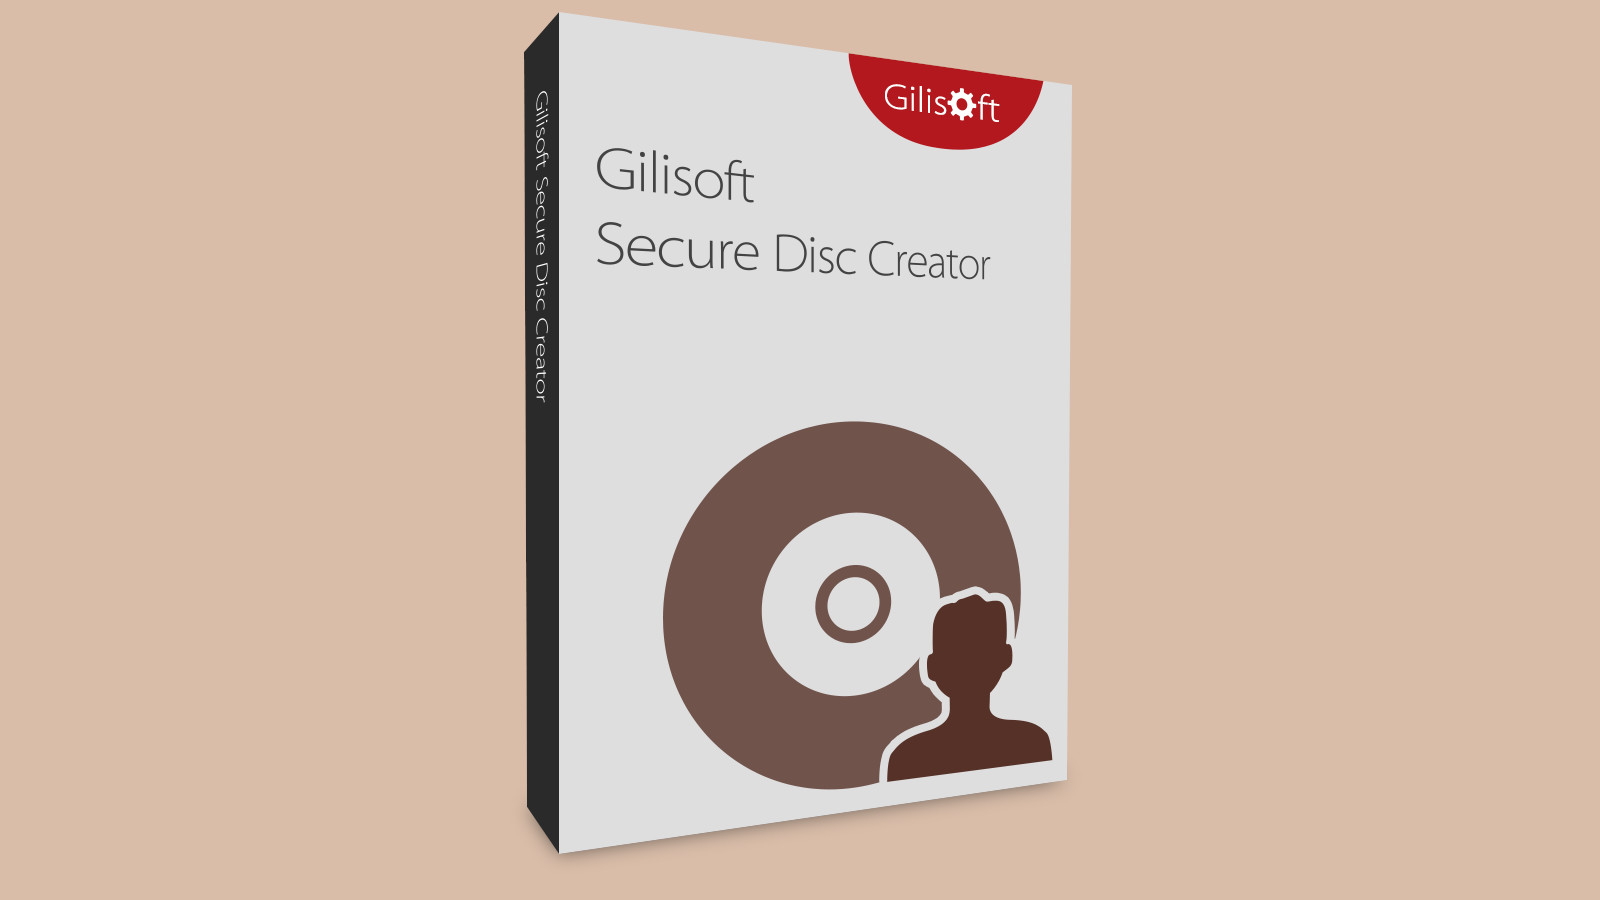 [$ 6.84] Gilisoft Secure Disc Creator CD Key